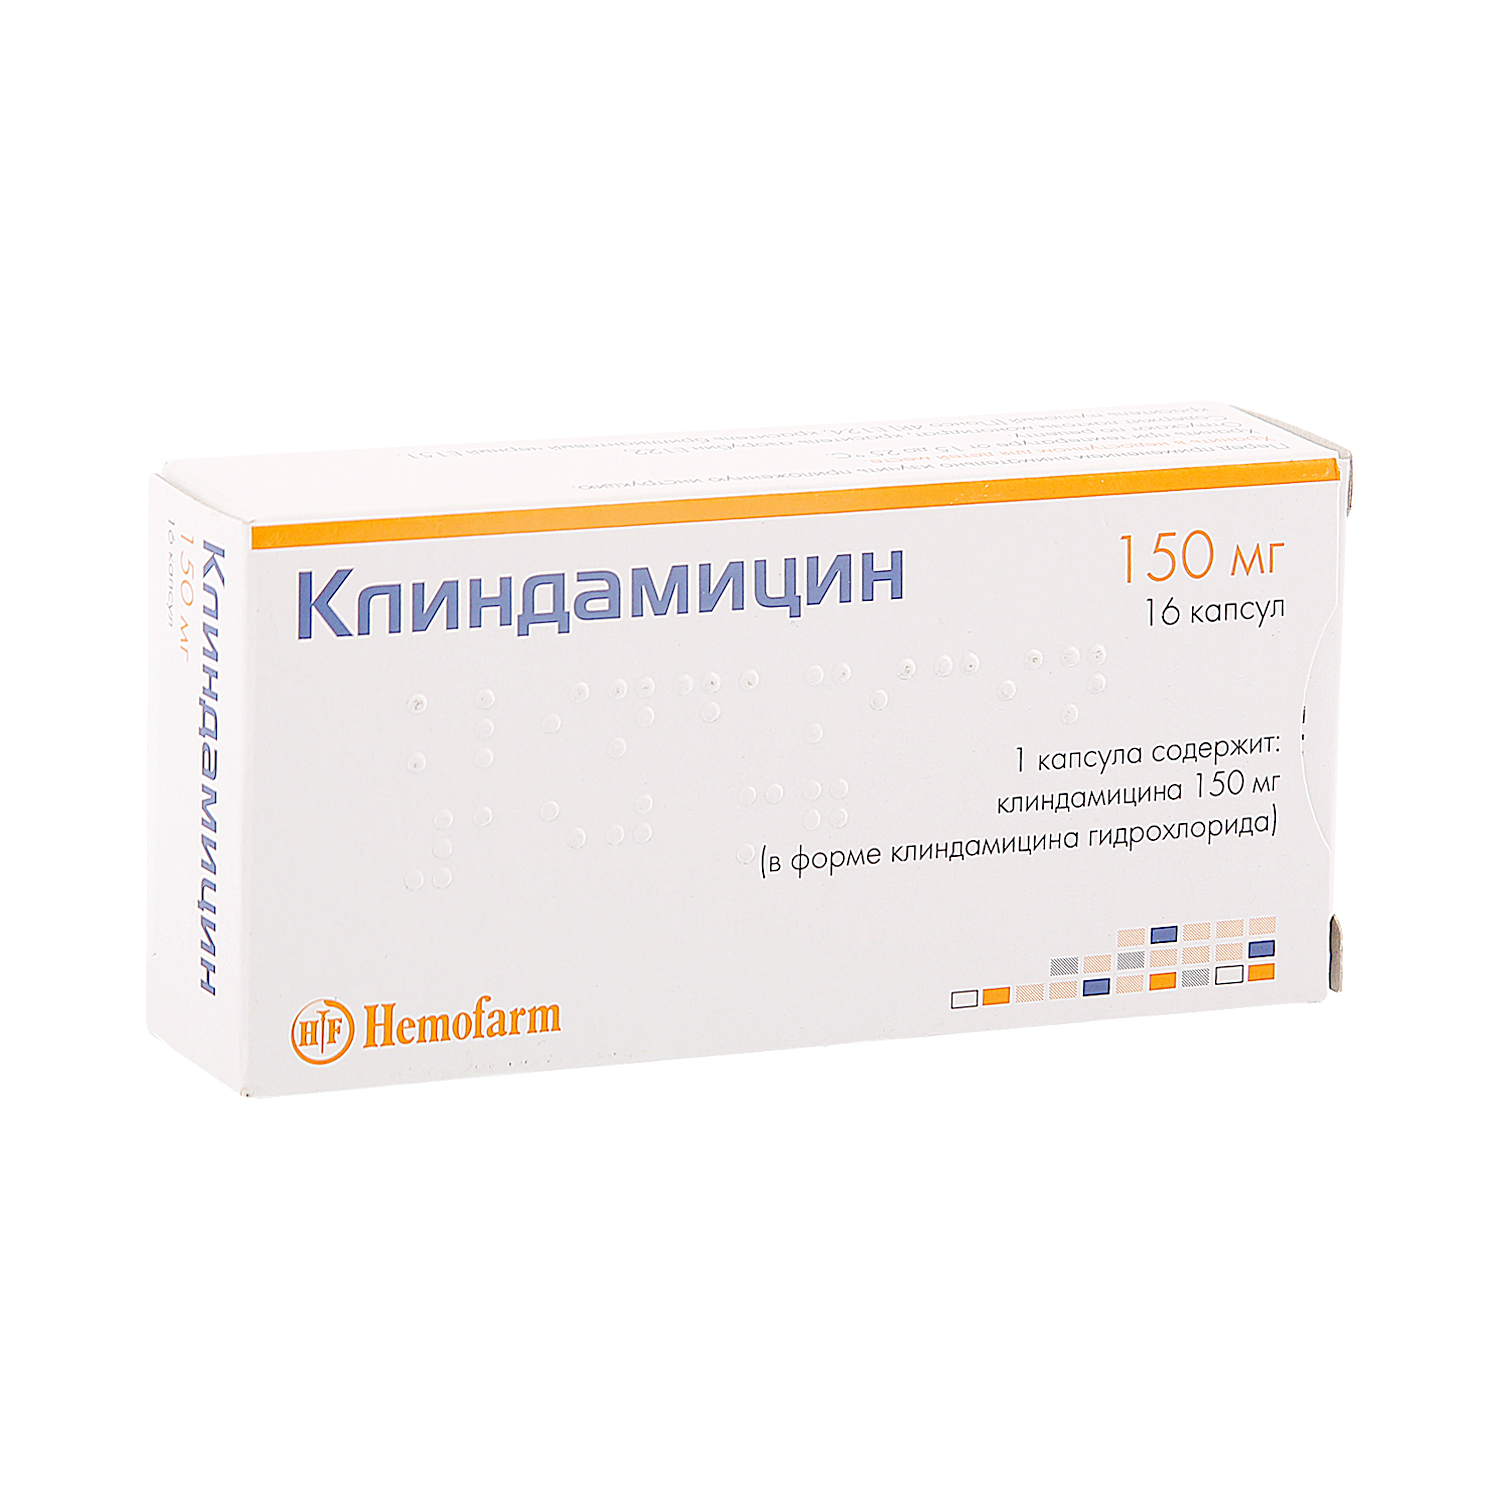 Клиндамицин группа антибиотиков. Клиндамицин 150 Хемофарм. Клиндамицин 150 мг капсулы. Клиндамицин капсулы 150 мг №16 Хемофарм. Клиндамицин (капс. 150мг n16 Вн ) Хемофарм-Сербия.